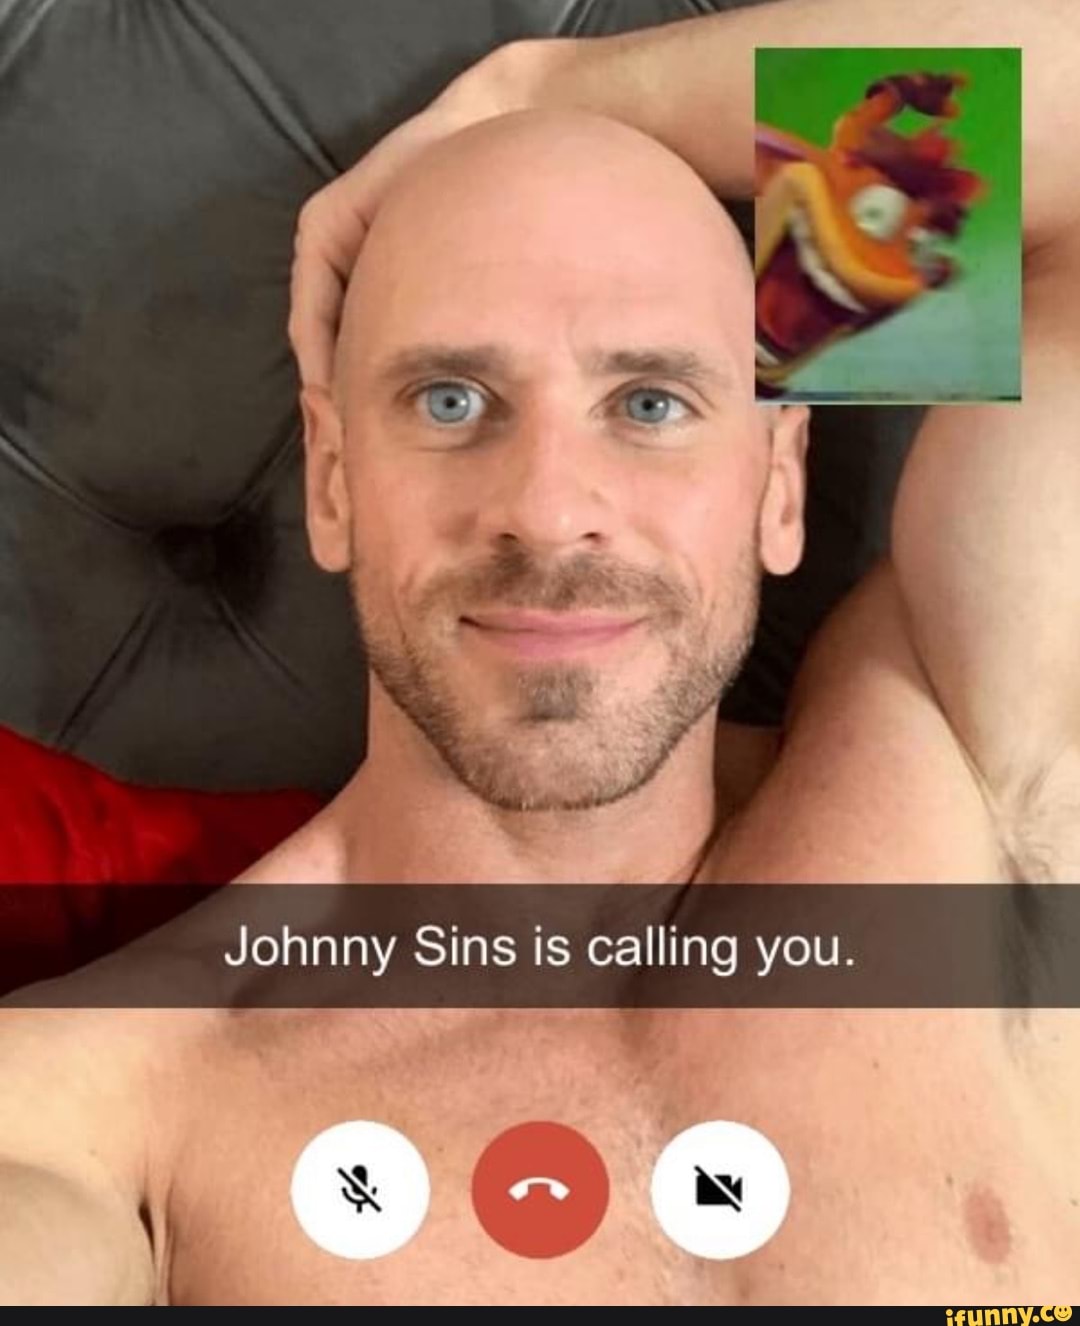 Is jhonny sins who Johnny Sins